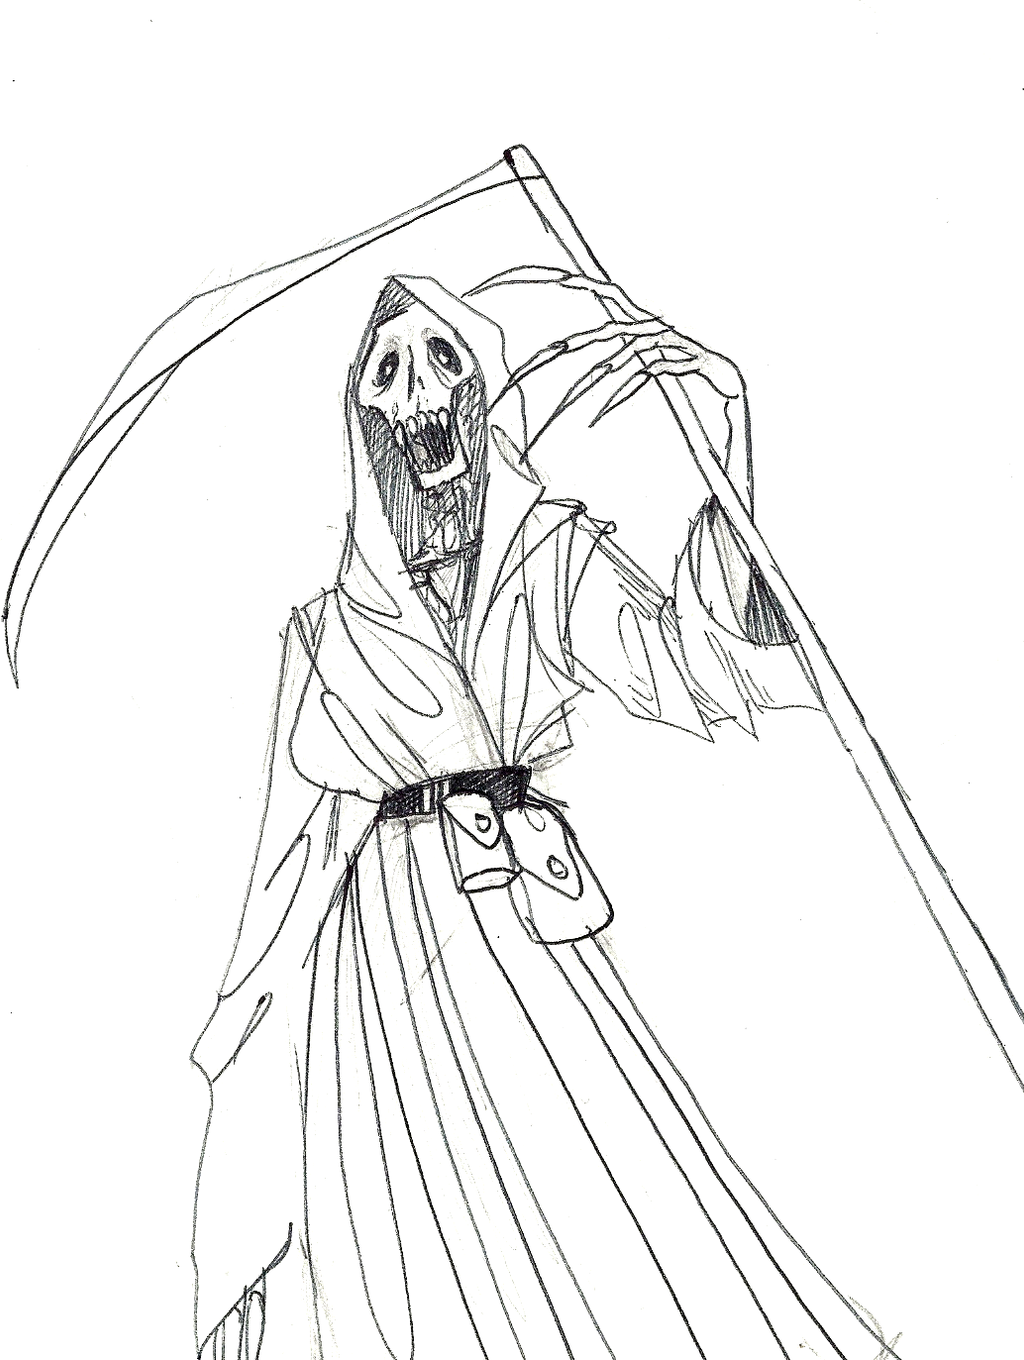 Grim Reaper by chihiros-code on DeviantArt